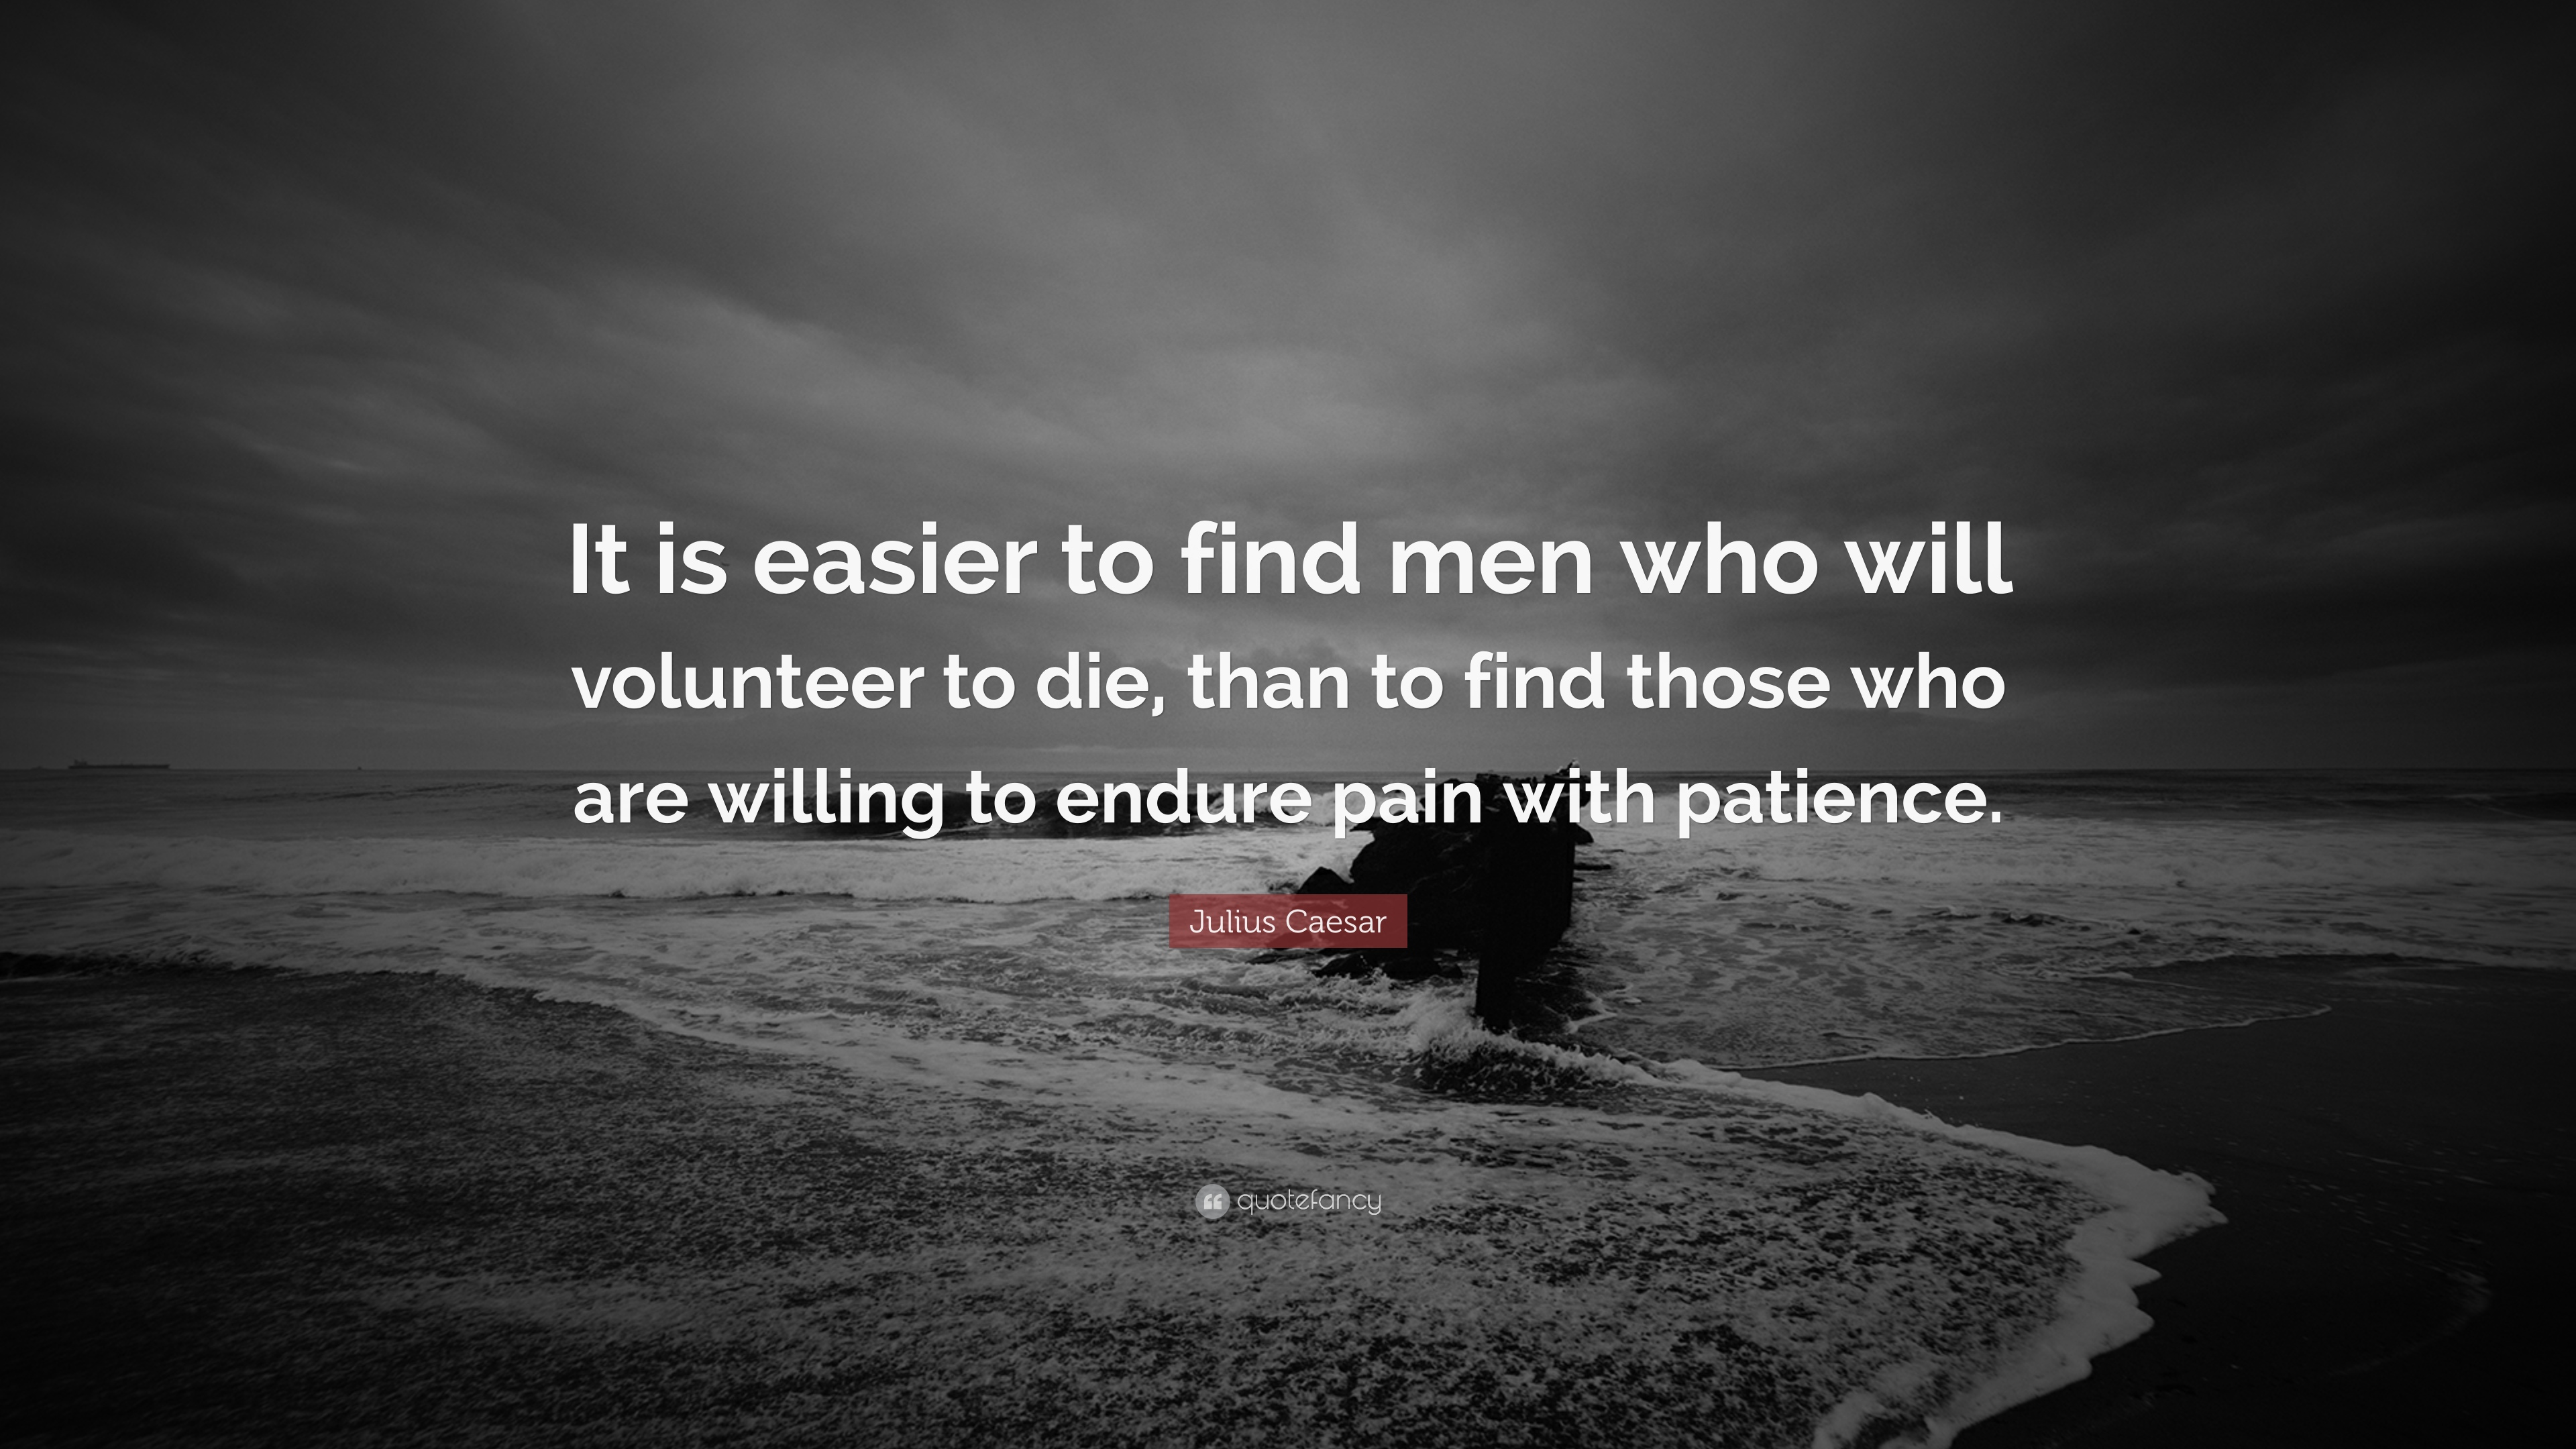 Julius Caesar Quote: "It is easier to find men who will volunteer to 